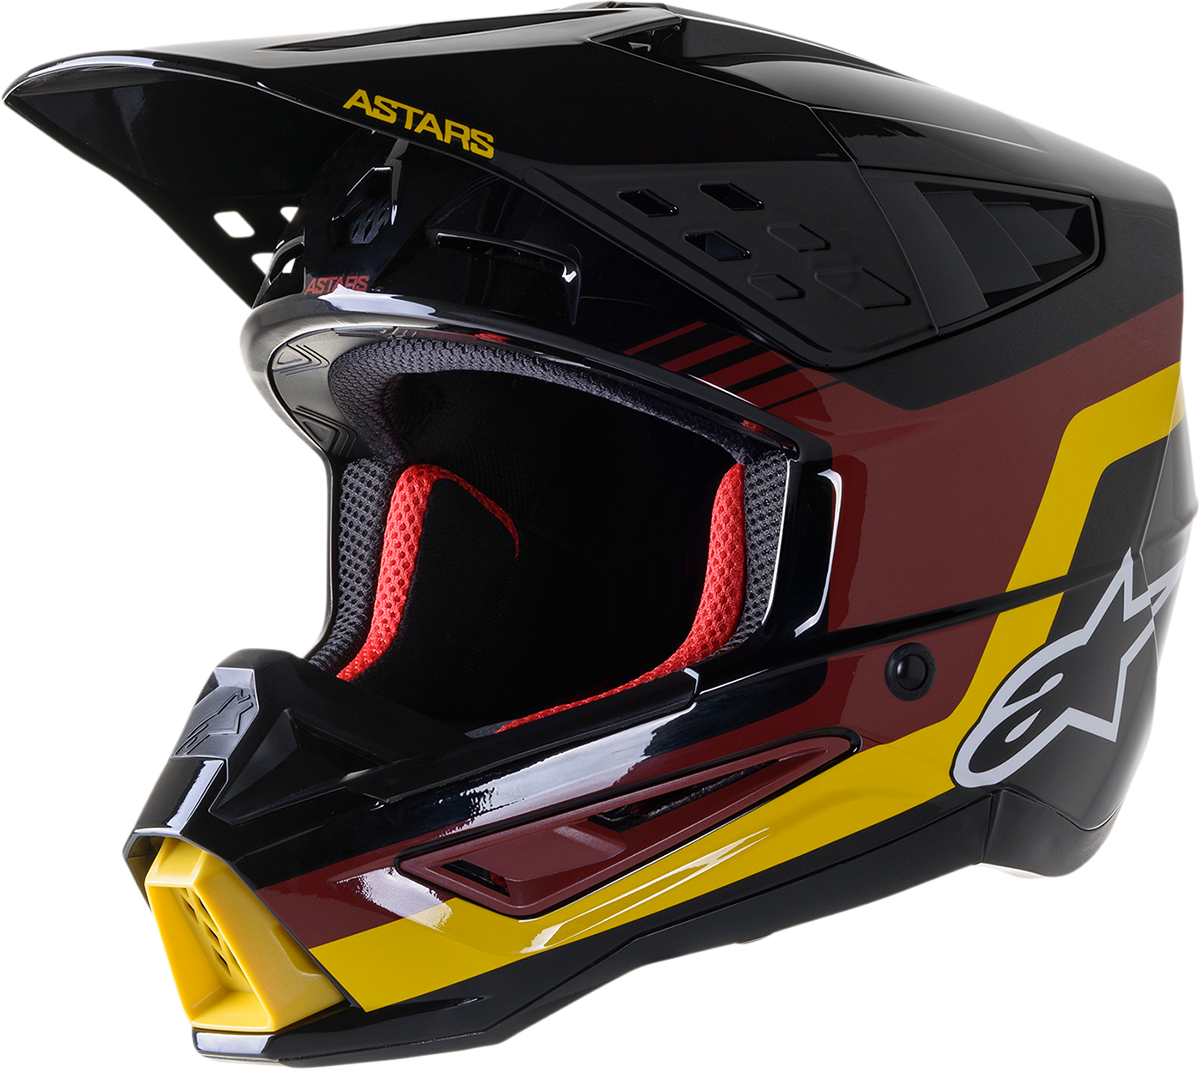 ALPINESTARS SM5 Helmet - Venture - Black/Bordeaux/Yellow/Glossy - Small 8305122-1358-SM